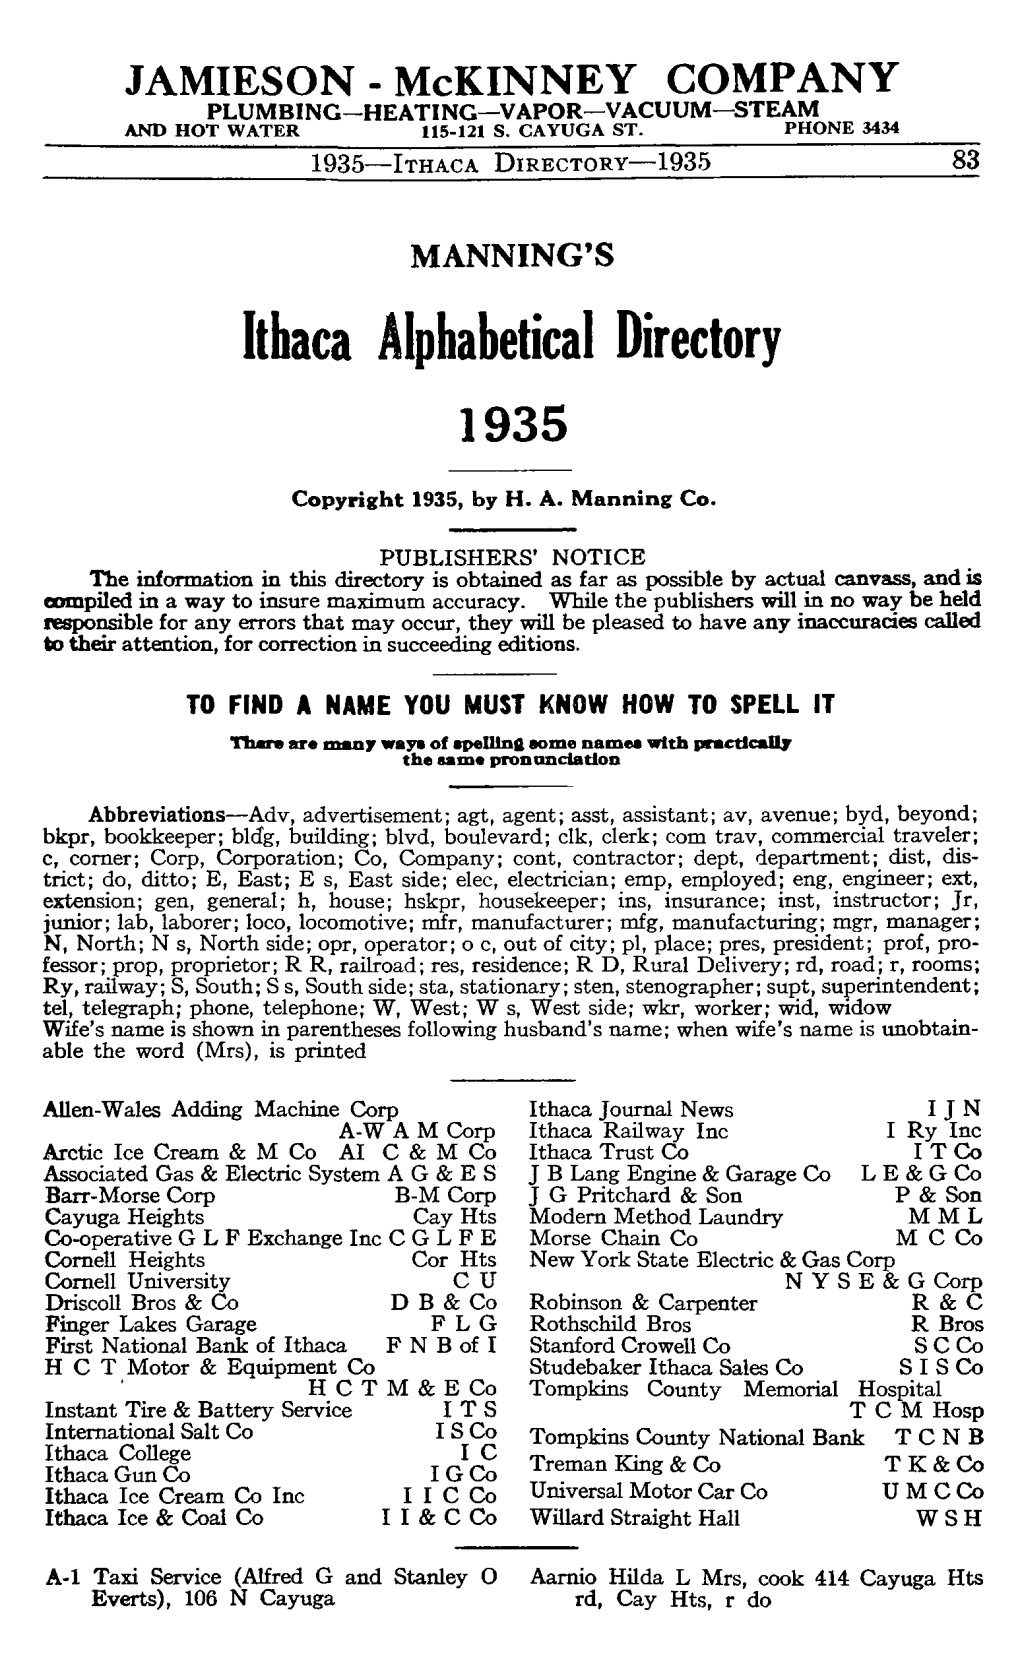 Ithaca Alphabetical Directory 1935